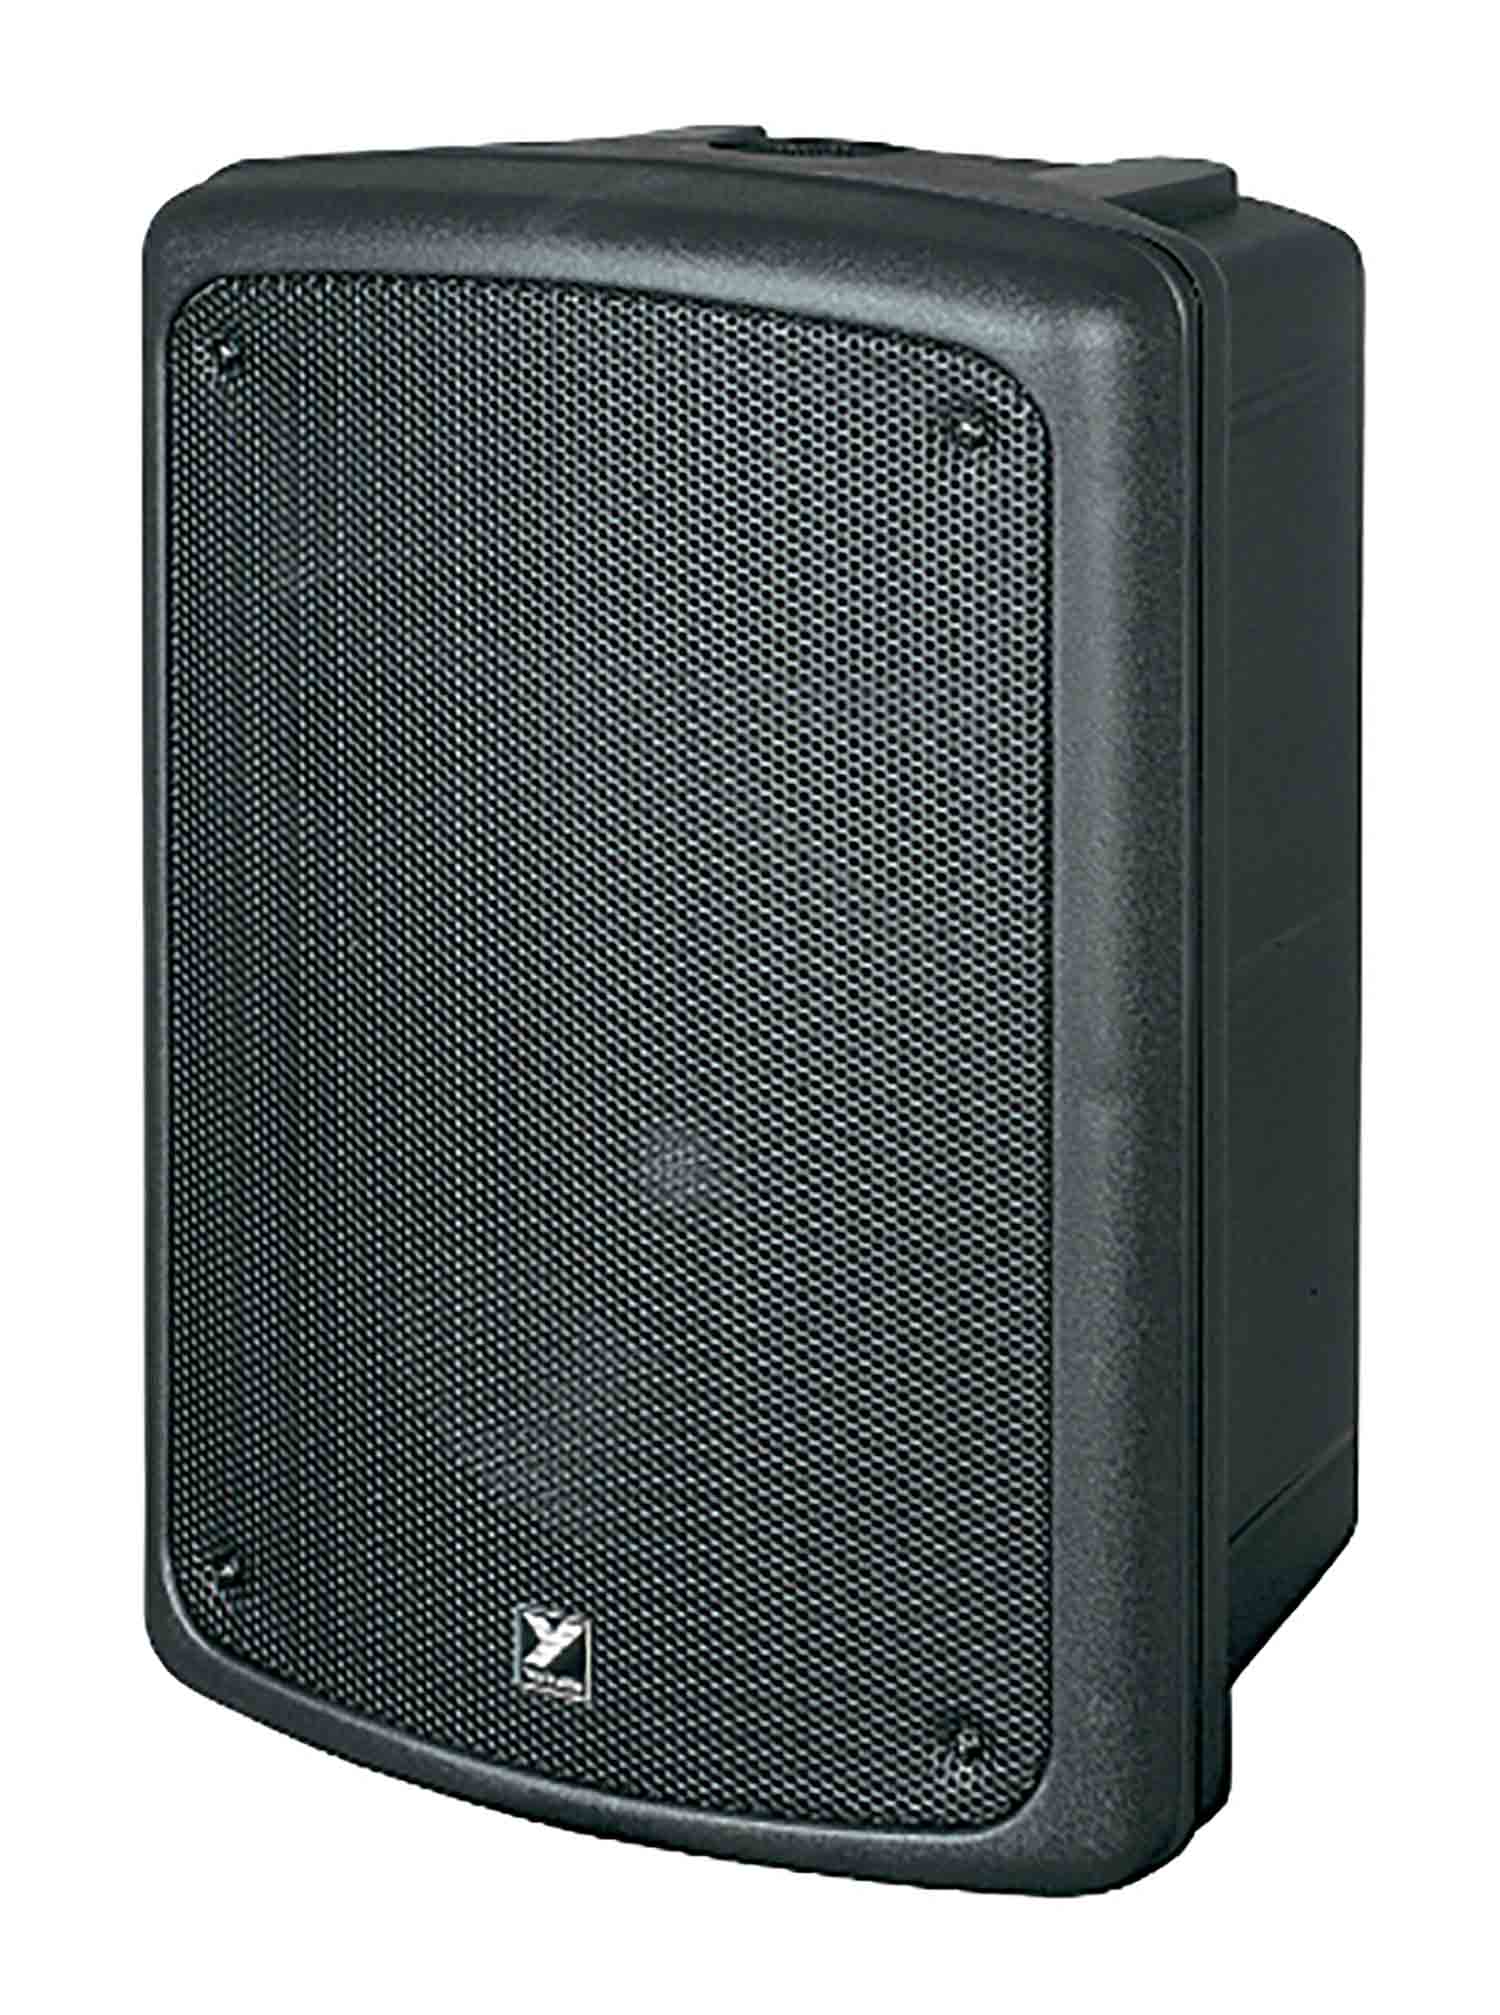 Yorkville Sound C170, Coliseum Mini 100W Two-Way Installation Speaker - 8 Inch Yorkville